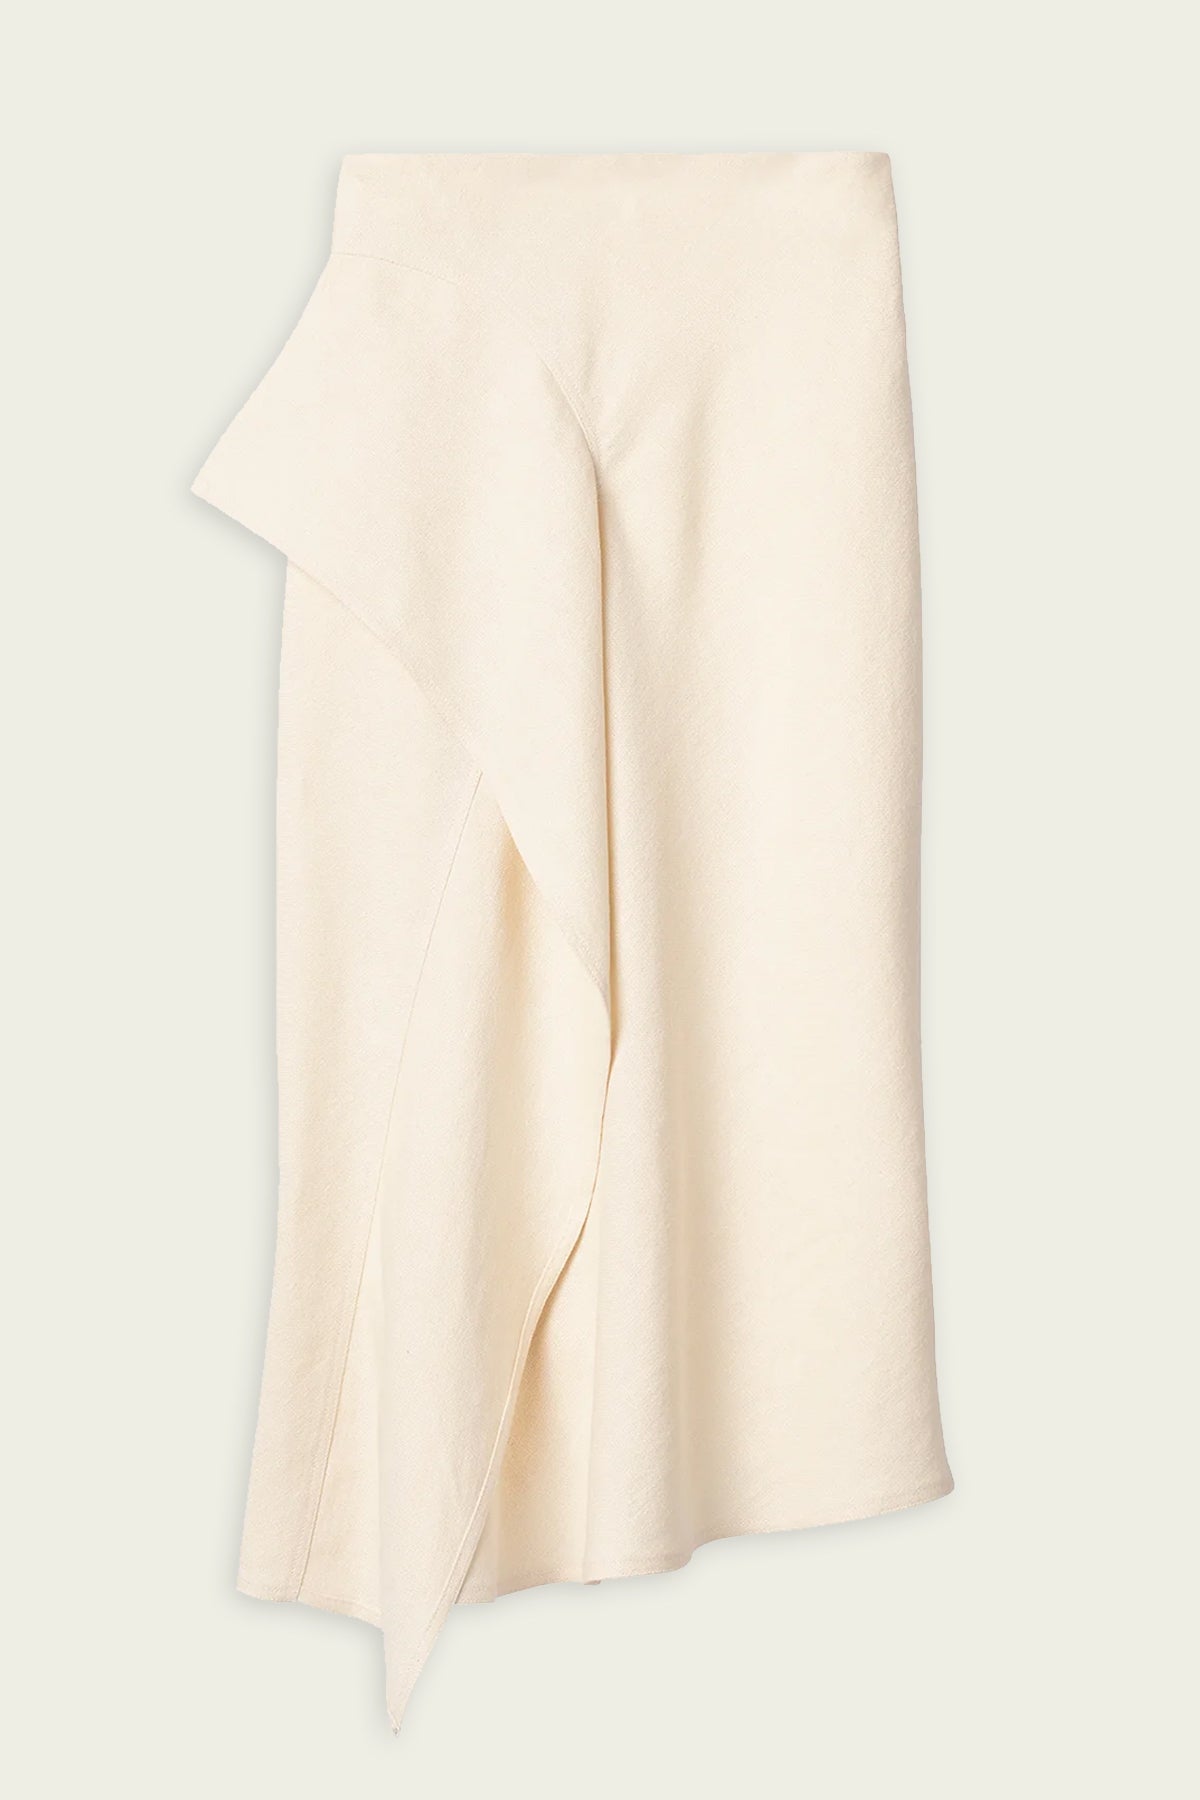 Lia Linen Midi Skirt in Apricot Sherbert - shop-olivia.com